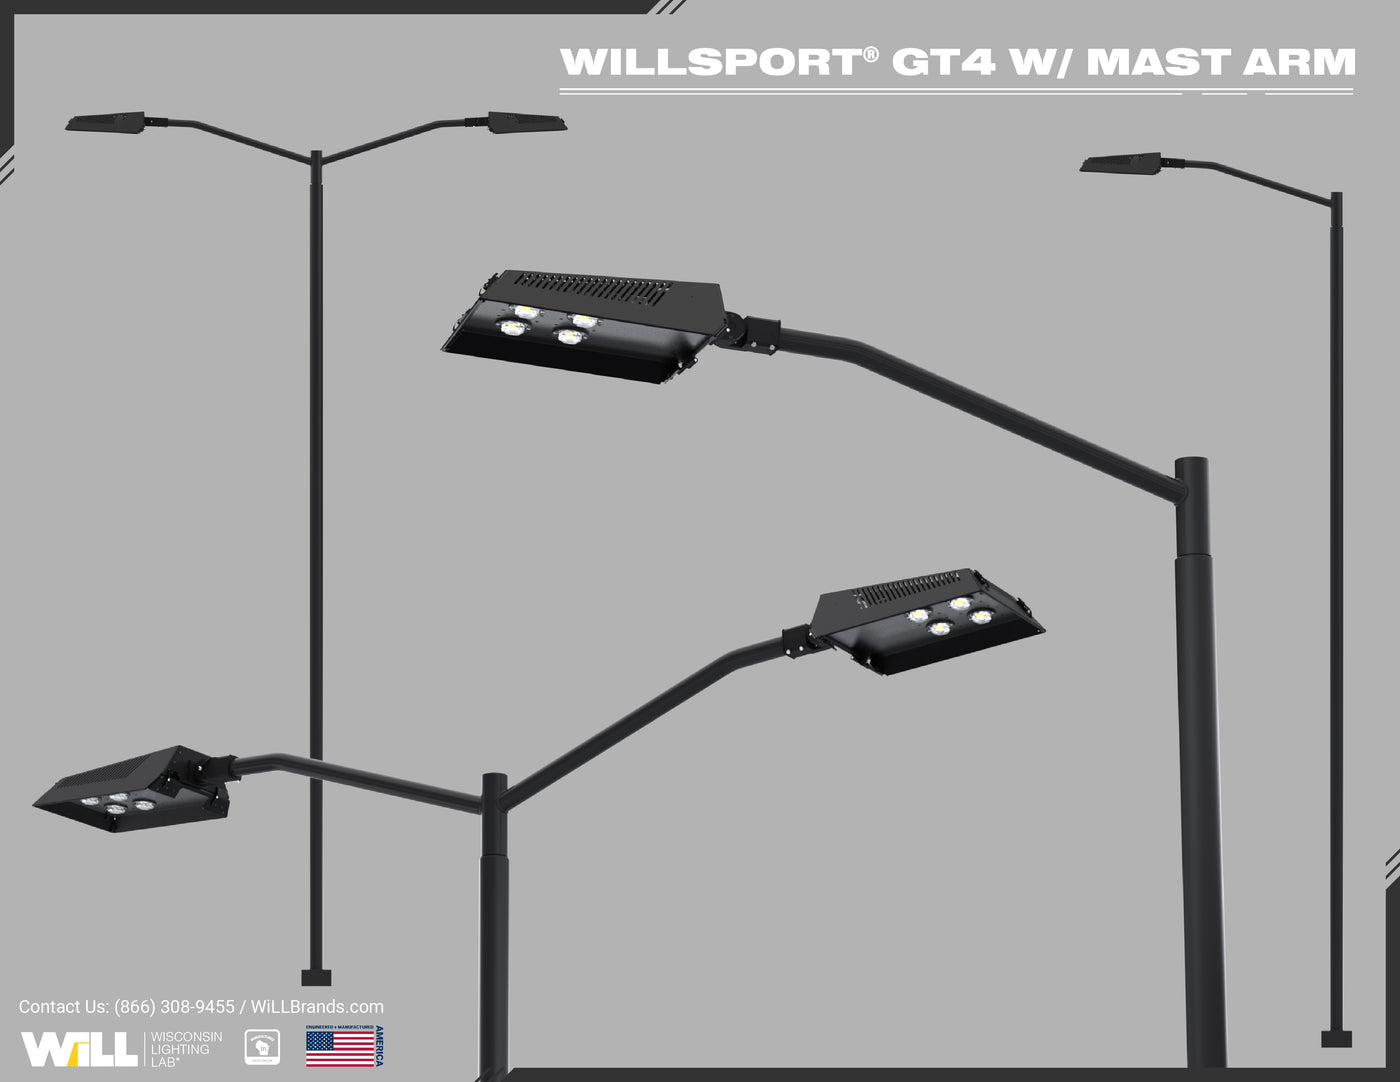 WiLLsport® GT4 W/ Mast Arm